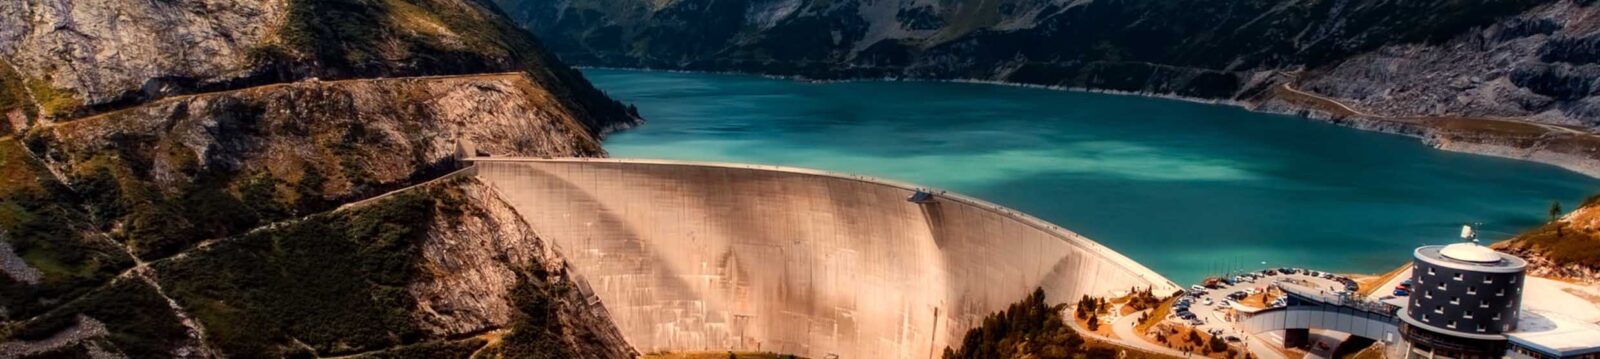 Hydroelectric dams